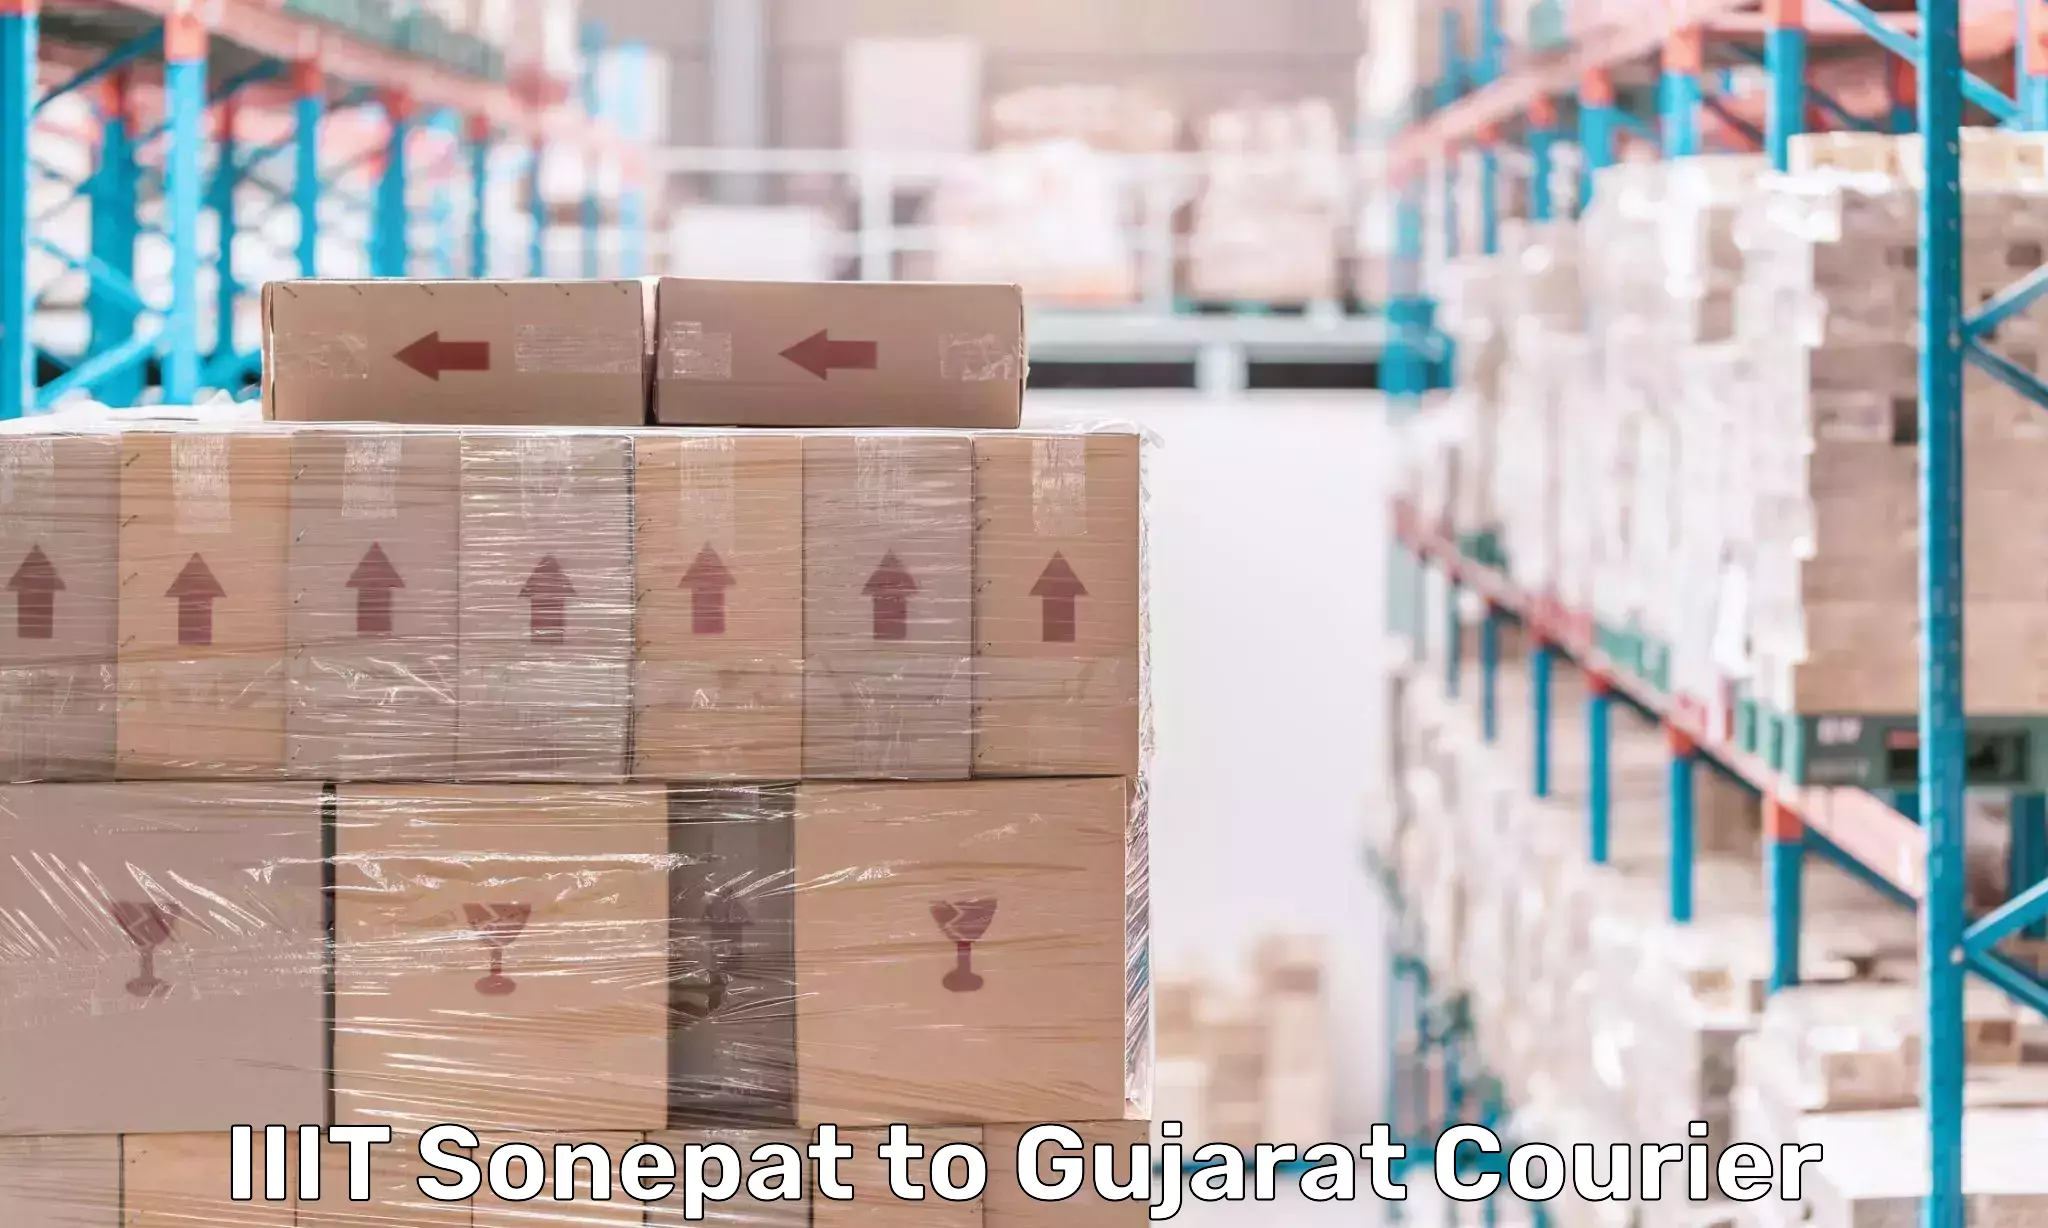 Enhanced tracking features IIIT Sonepat to Vatadara